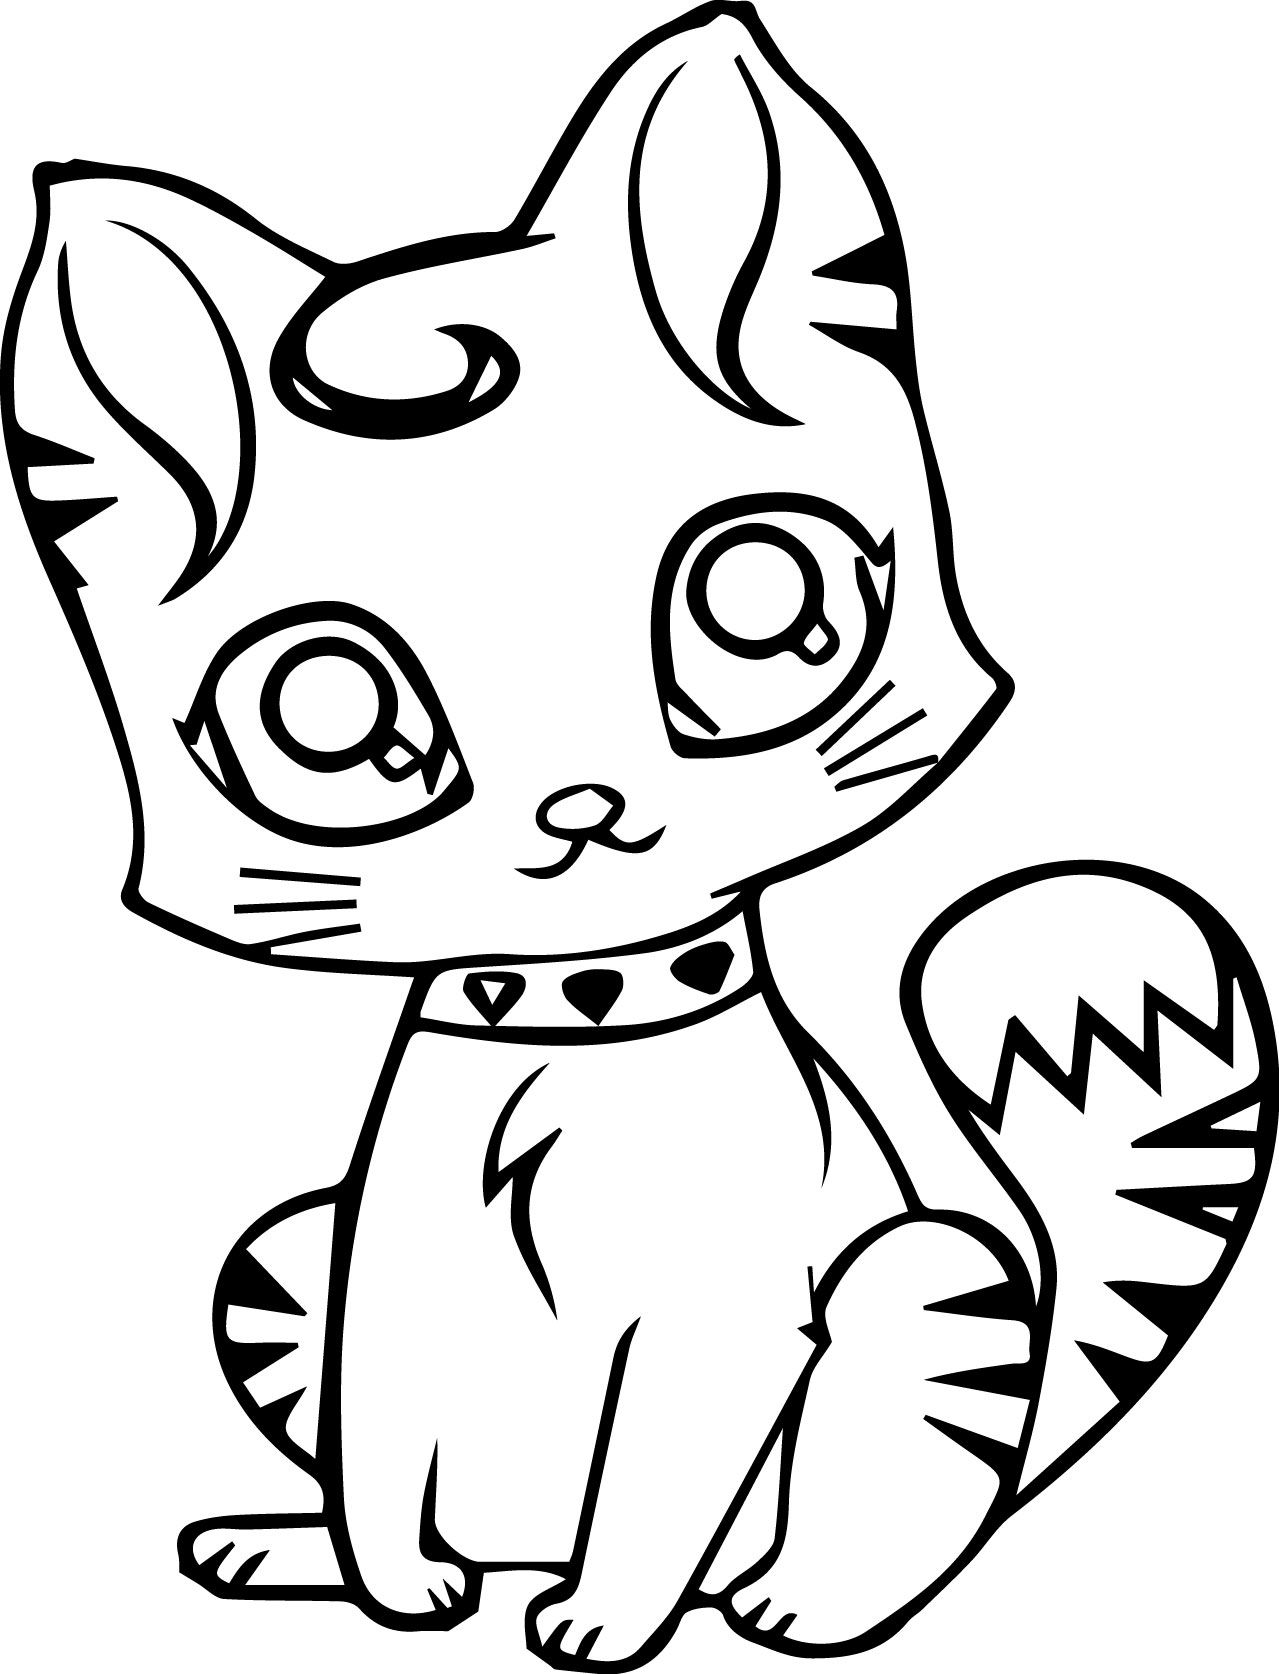 Anime Cats Coloring Pages - Anime Cats Coloring Pages to Print